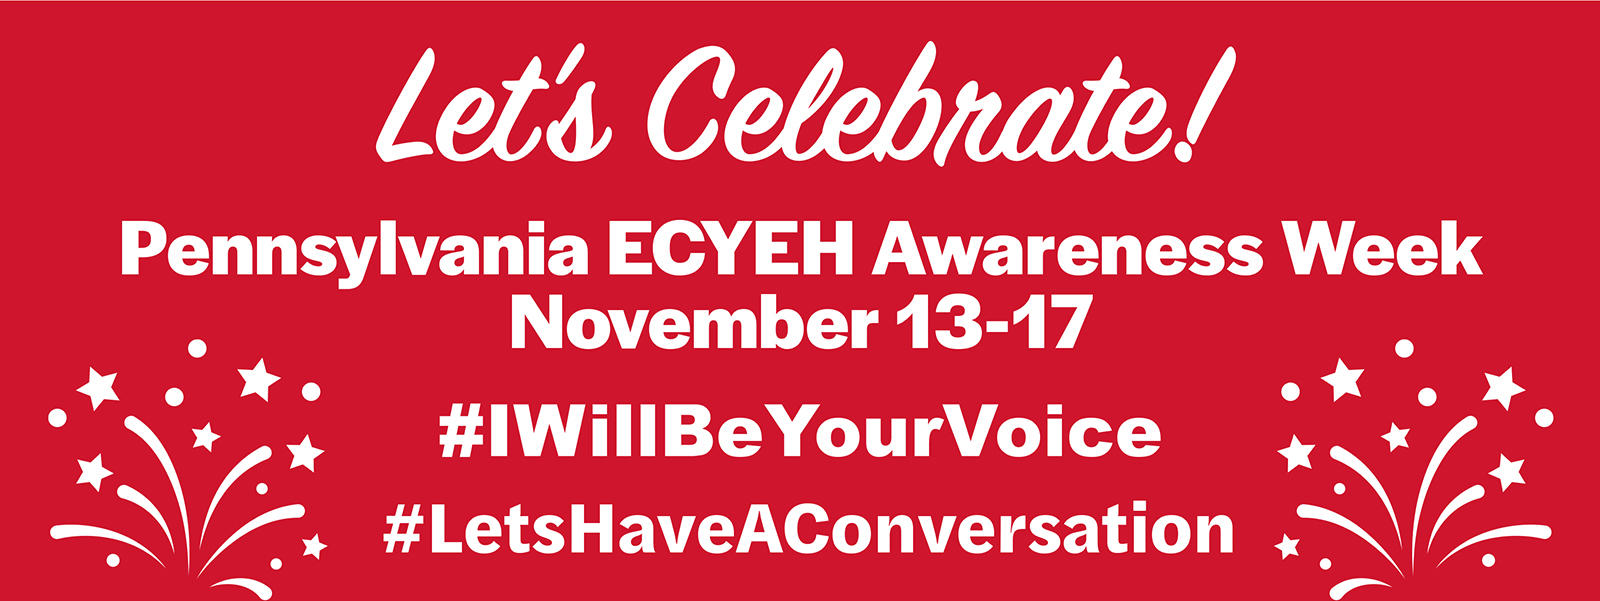 Let's celebrate ECYEH Awareness Week, November 13-17